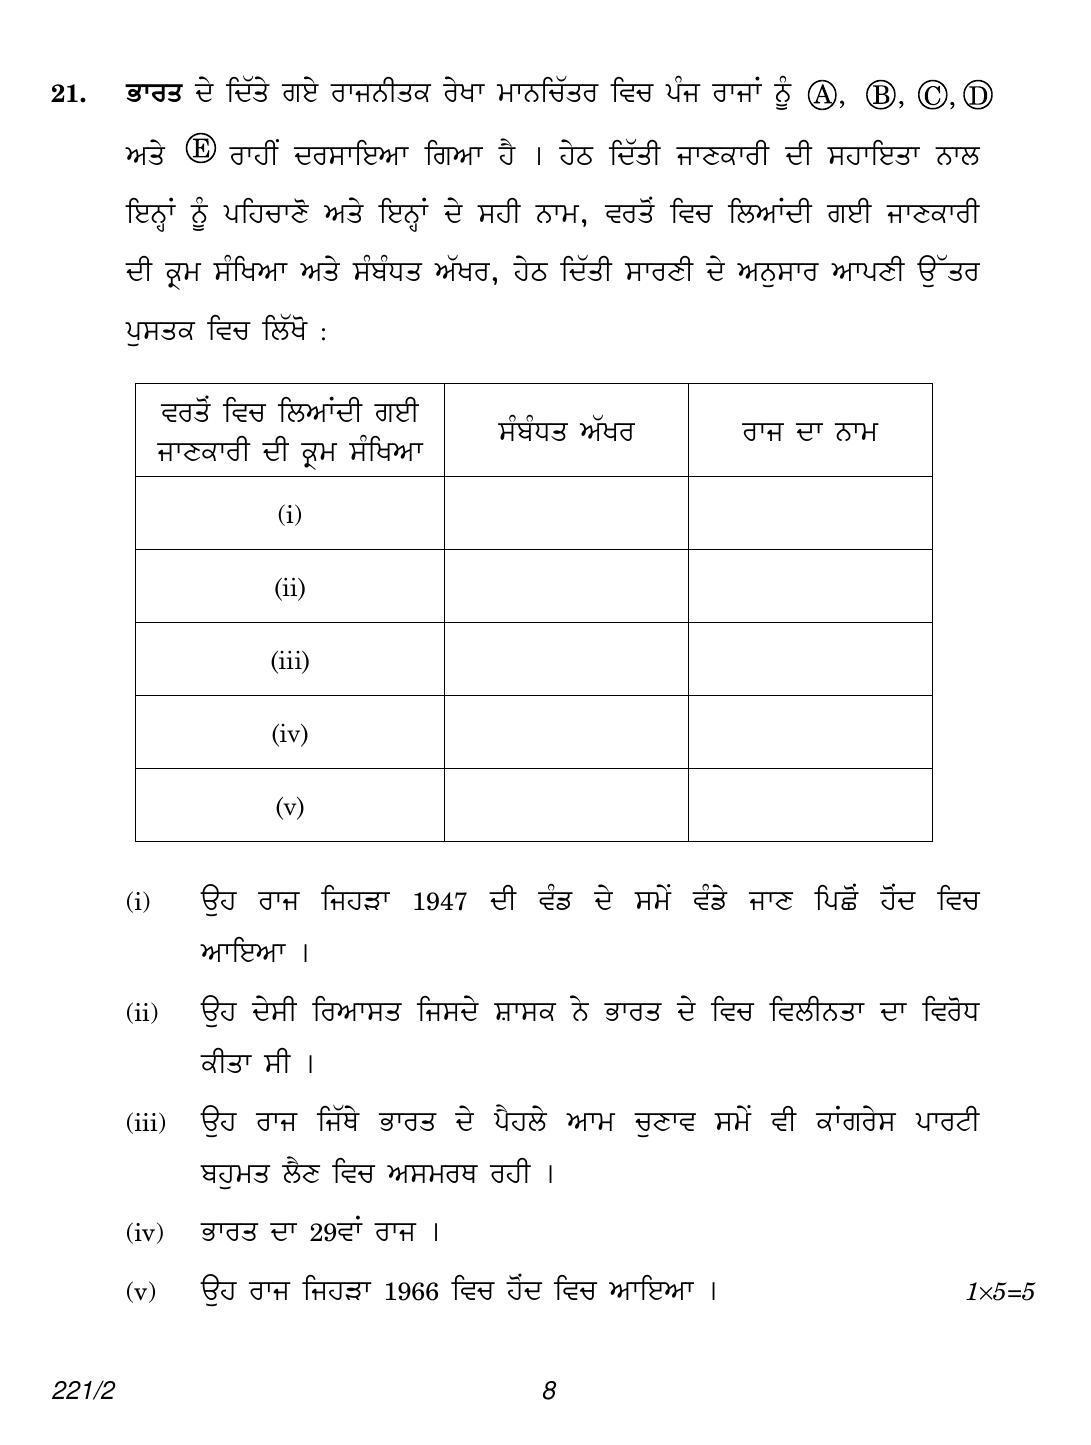 CBSE Class 12 221-2 (Political Science Punjabi) 2018 Question Paper - Page 8